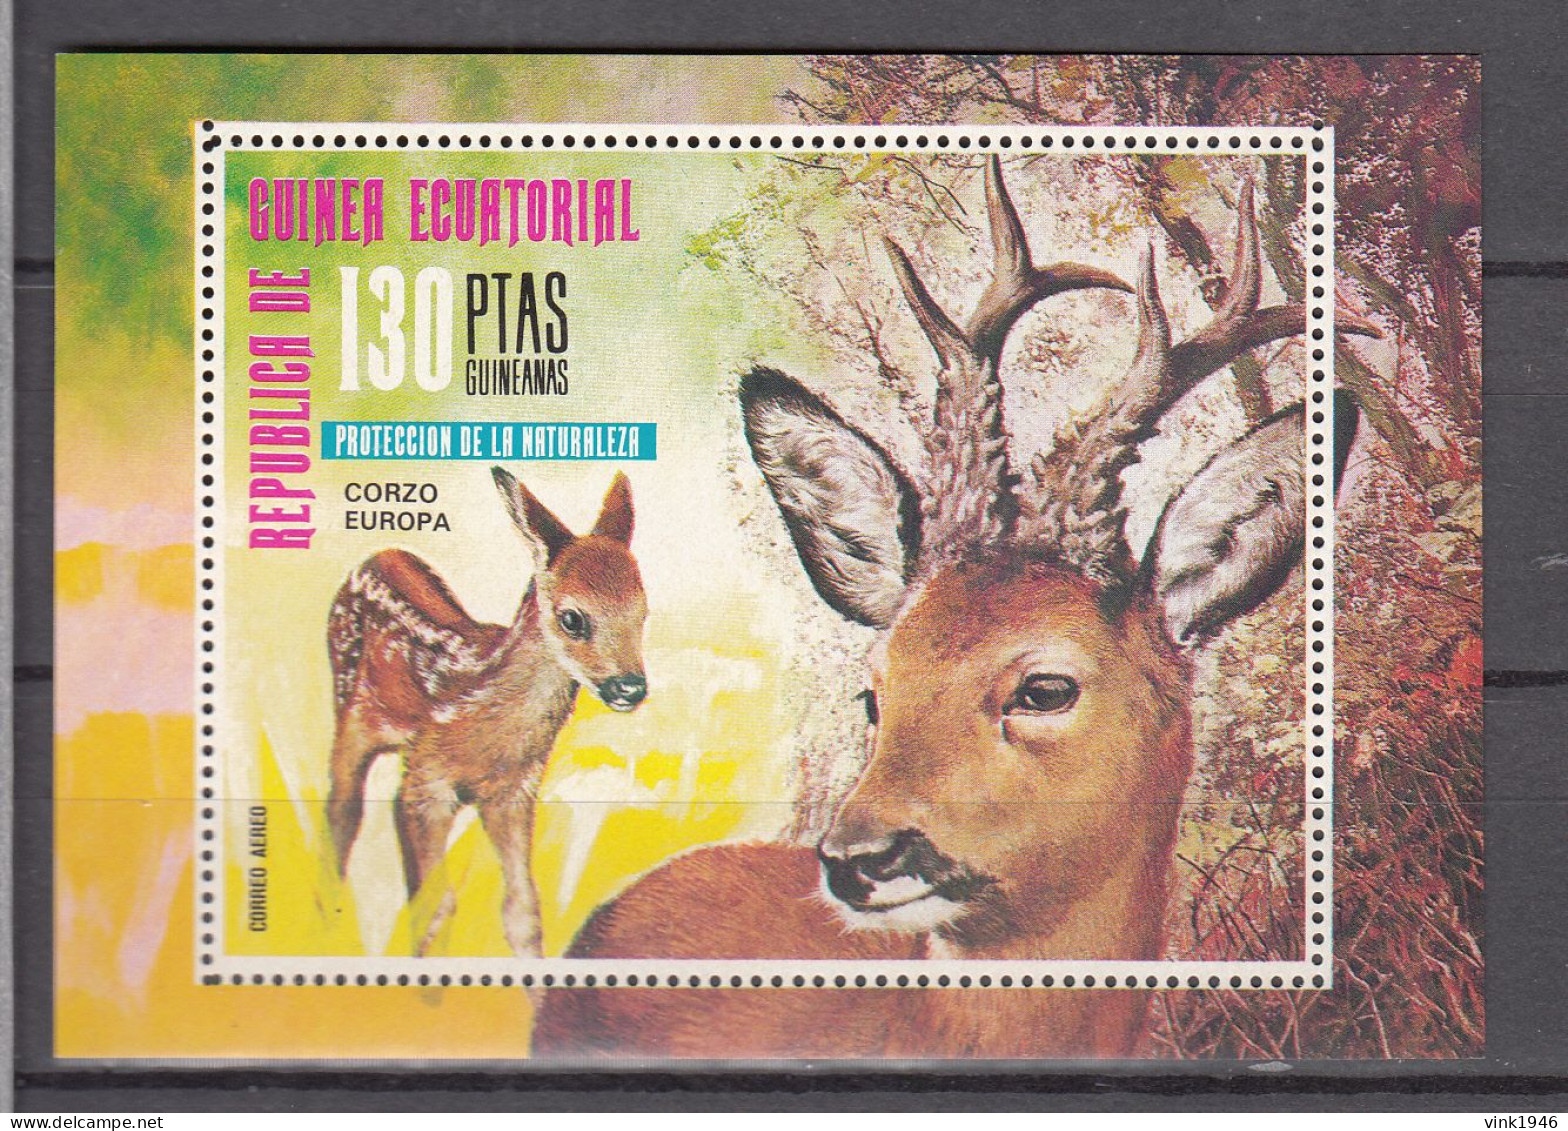 Eq Guinea 1976,1V In Block,hert,deer,MNH/Postfris(L4463) - Wild